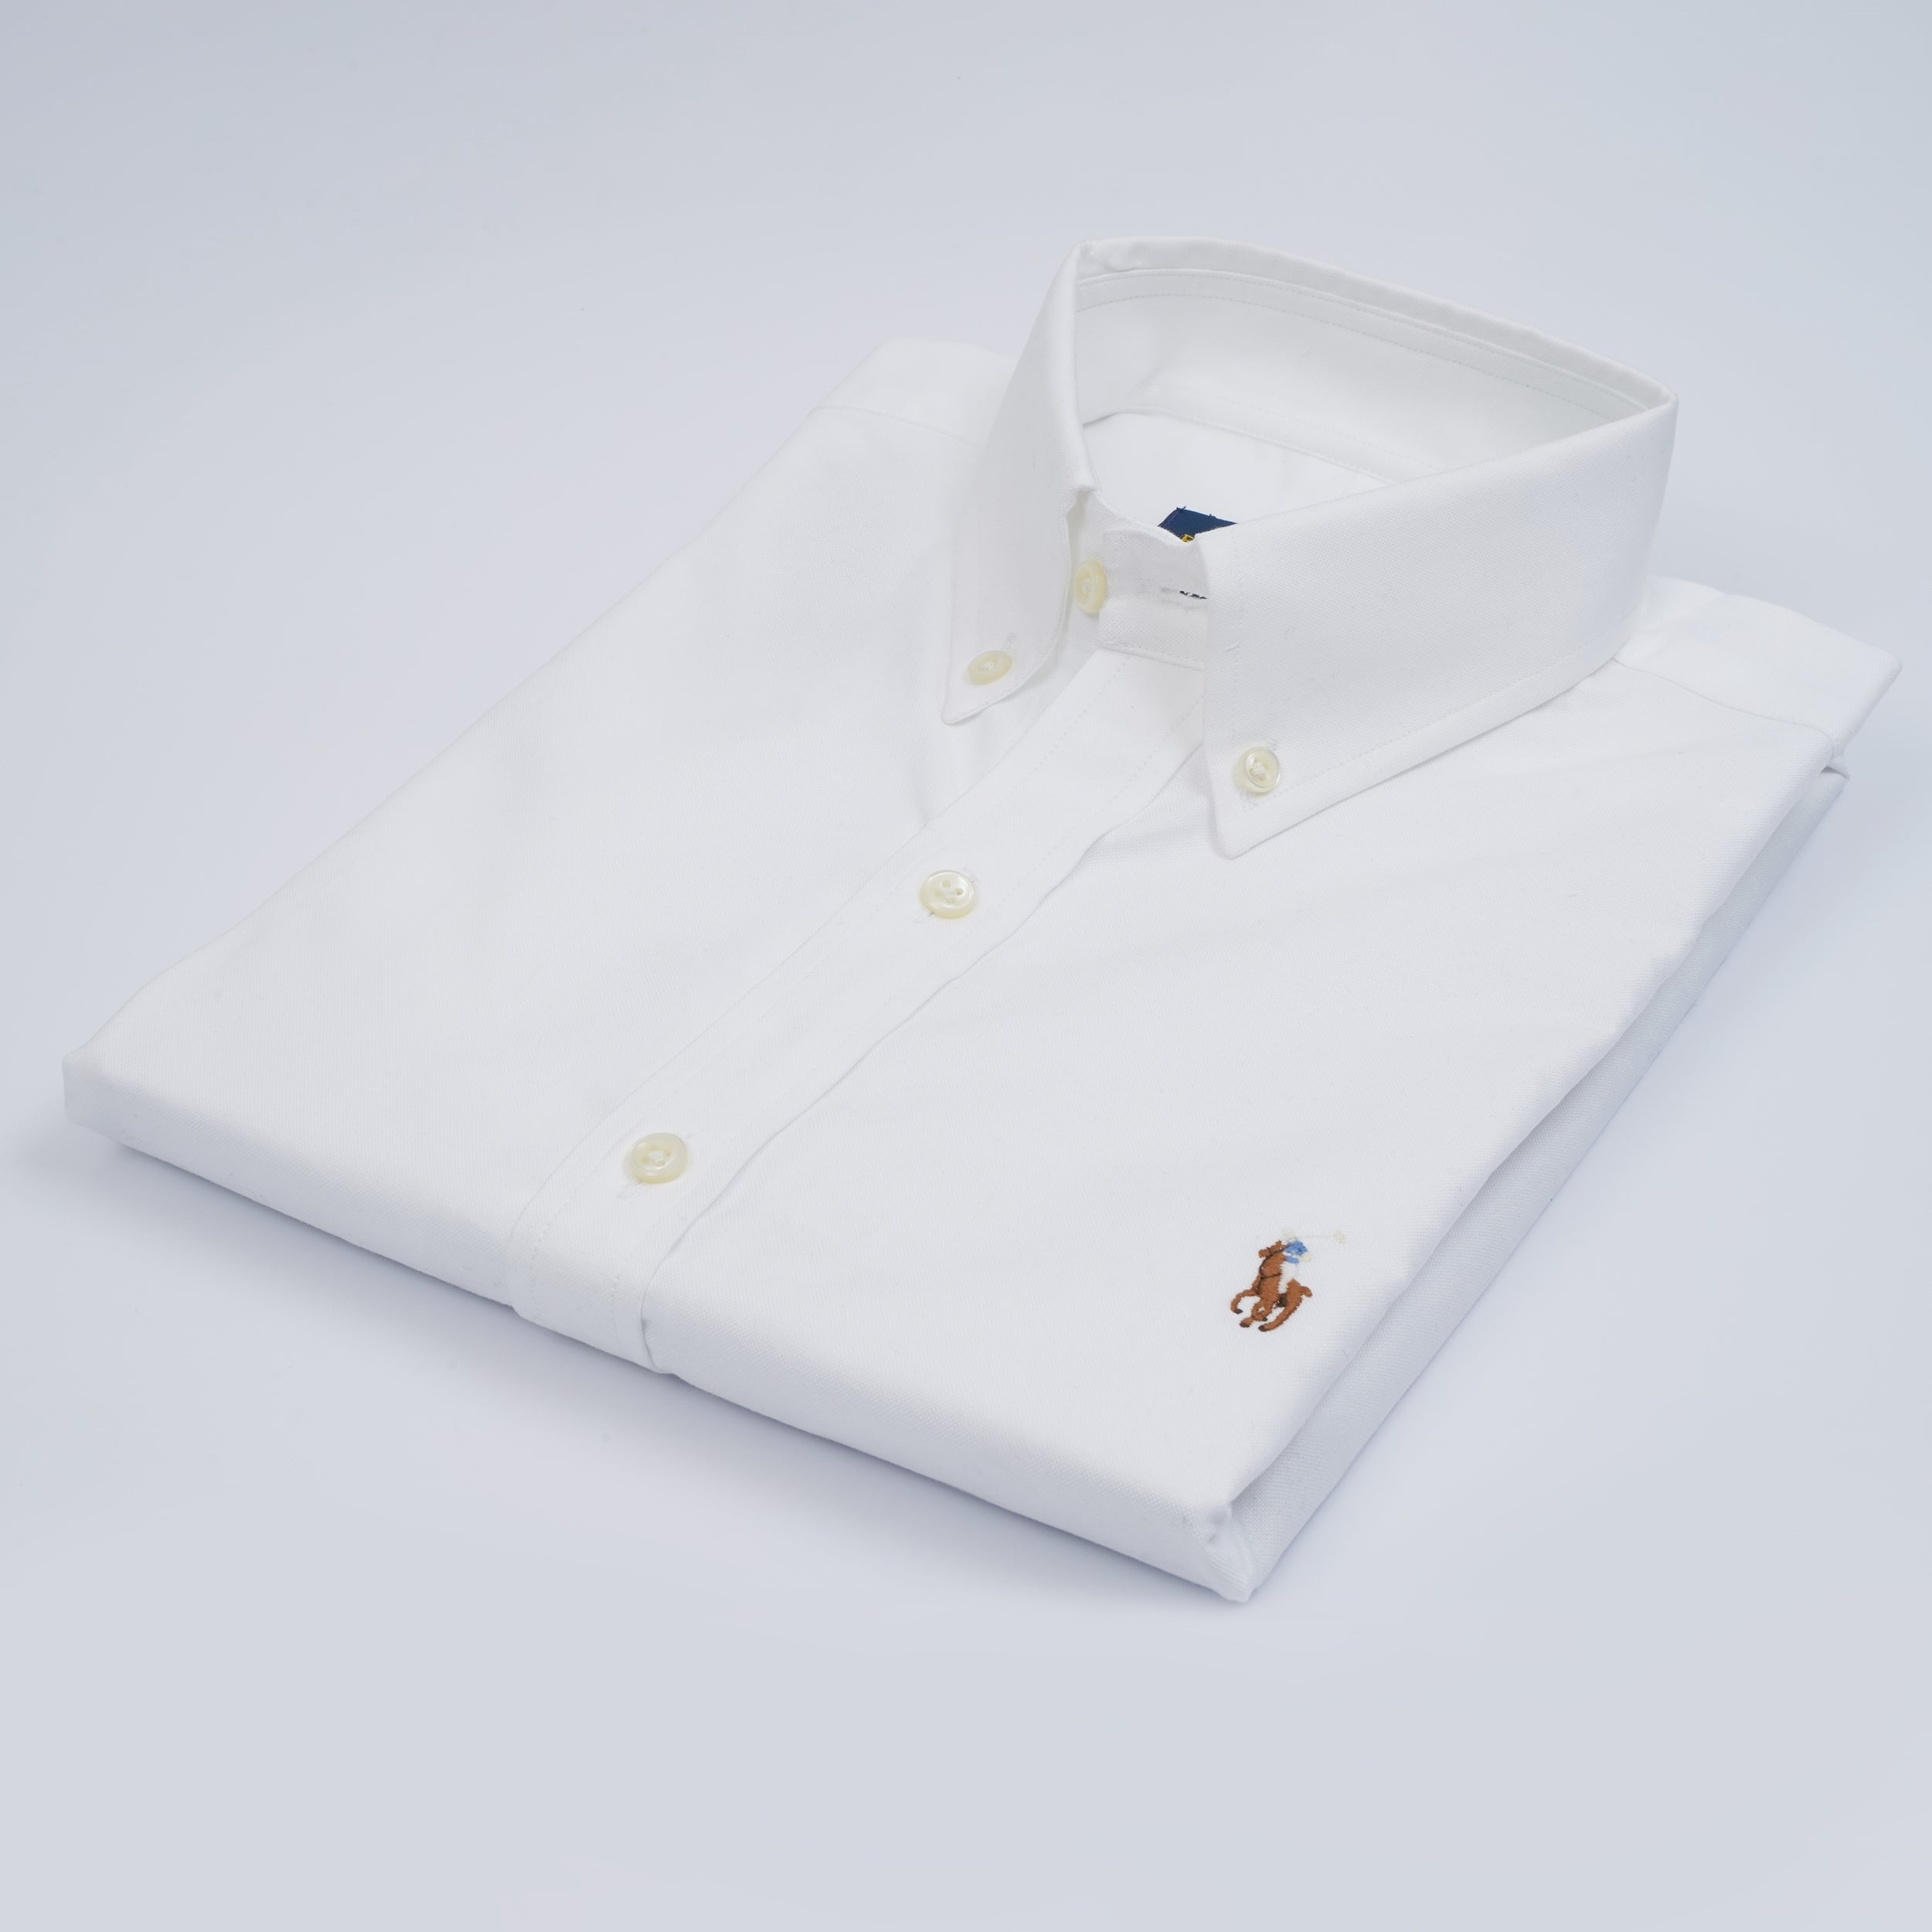 RL white Embroidered logo Oxford Shirt